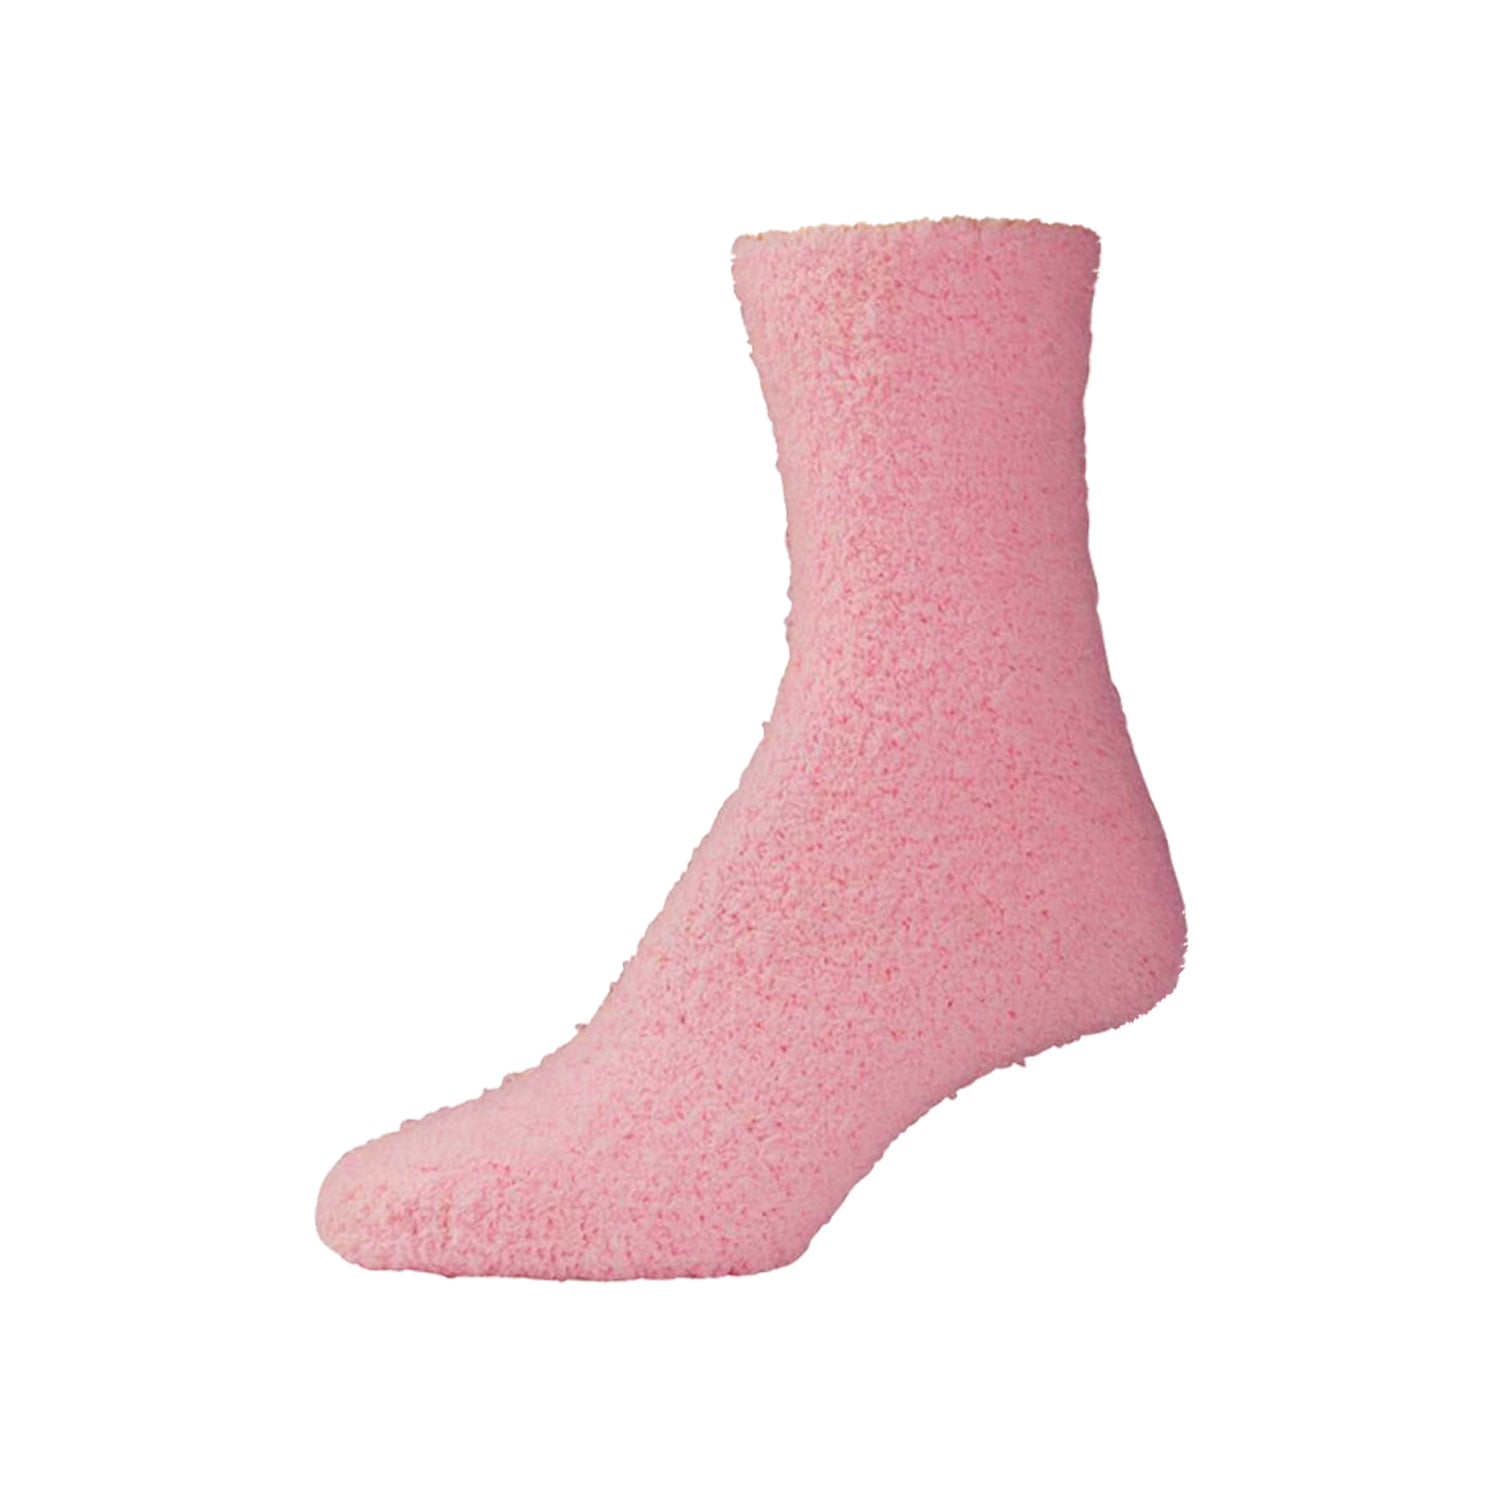 Womens Fluffy Pink Fuzzy Socks